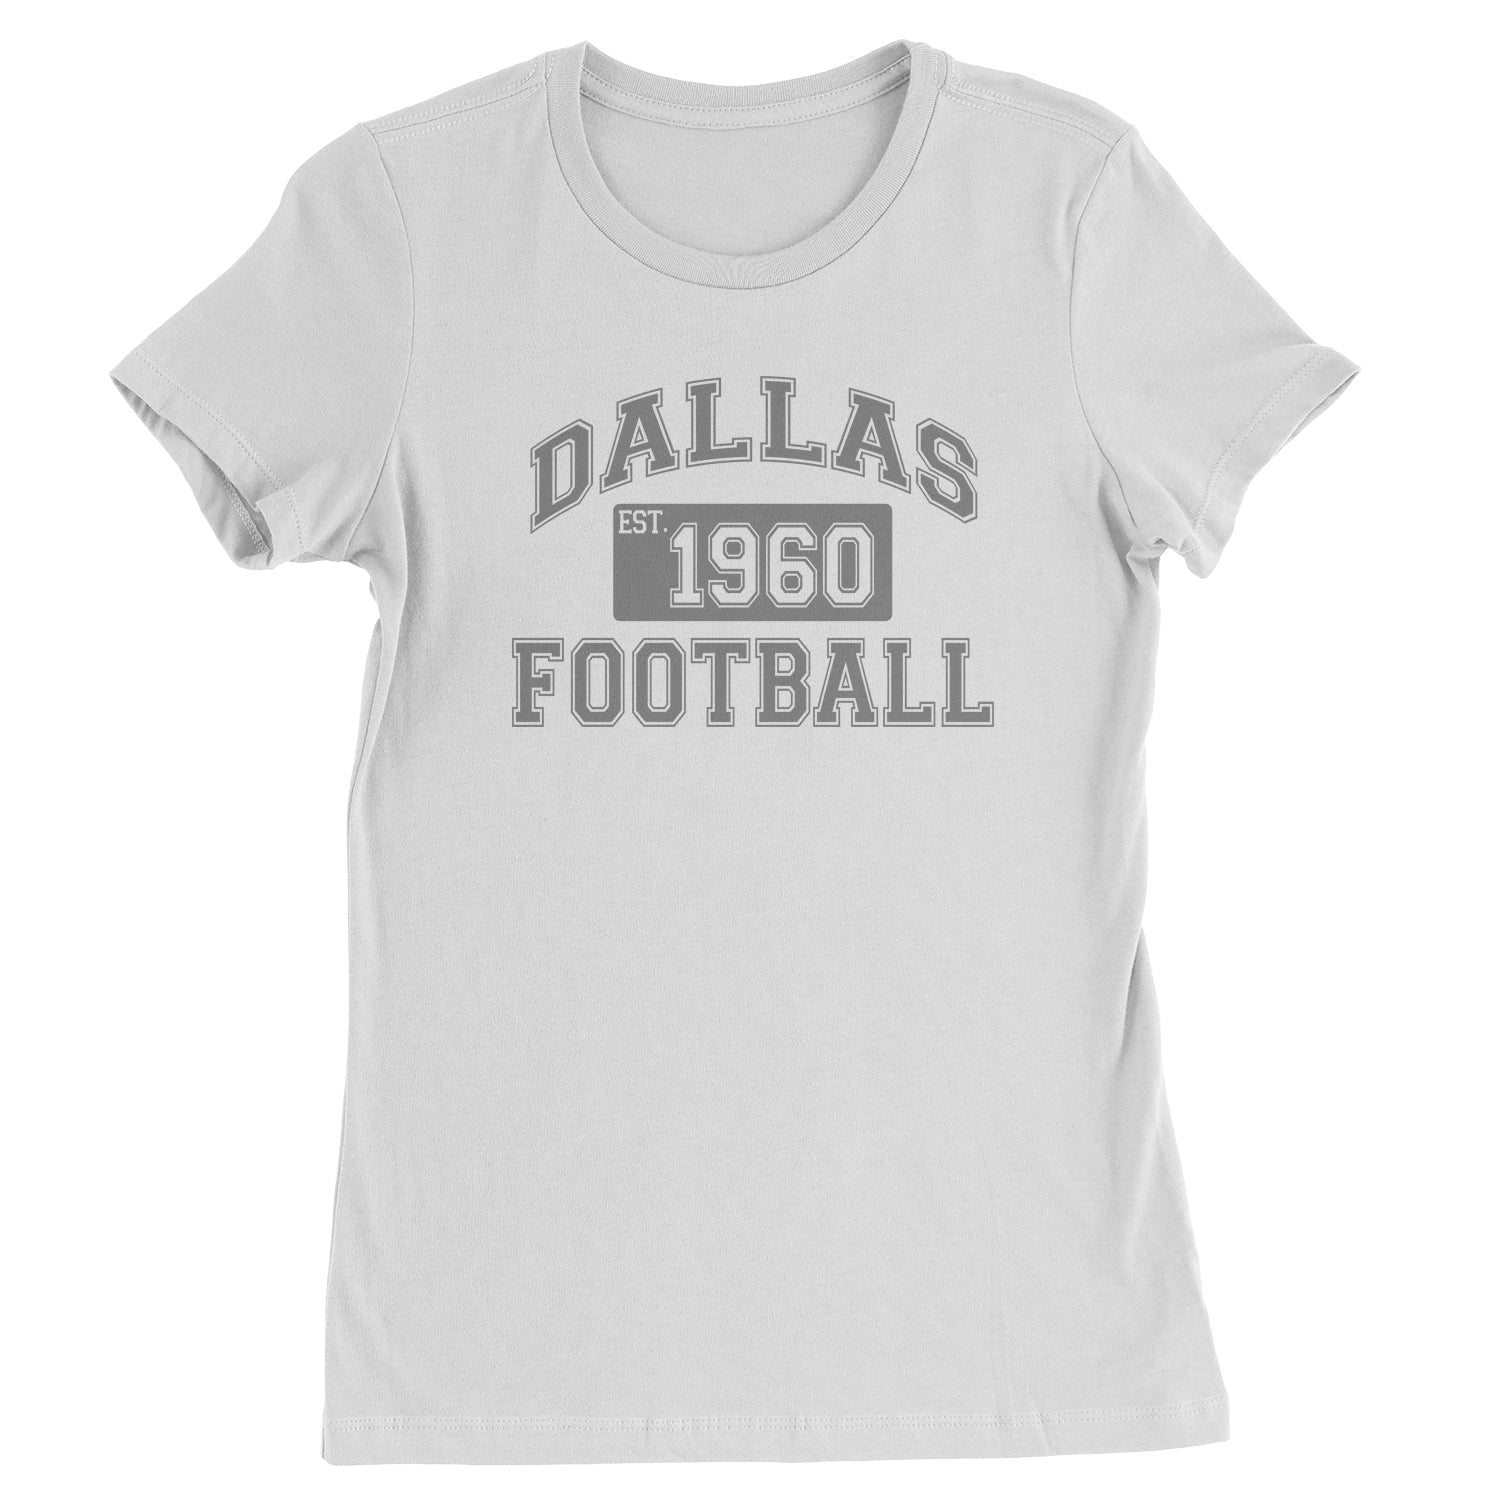 Dallas Football Established 1960 Womens T-shirt boys, dem by Expression Tees